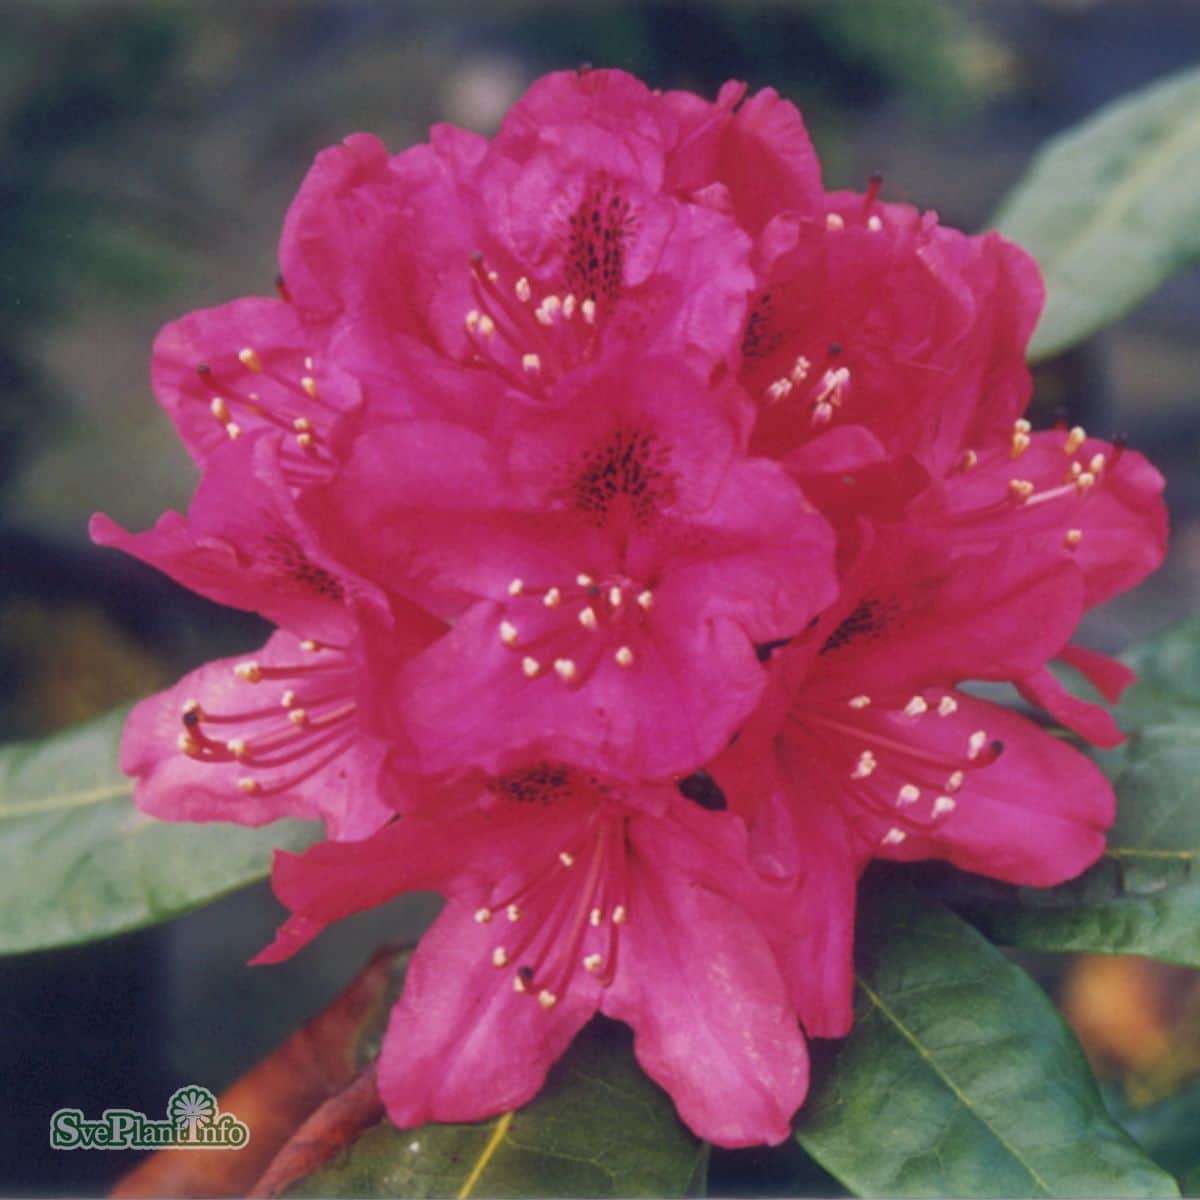 rhododendron-nova-zembla-co-30-40cm-1-pack-2